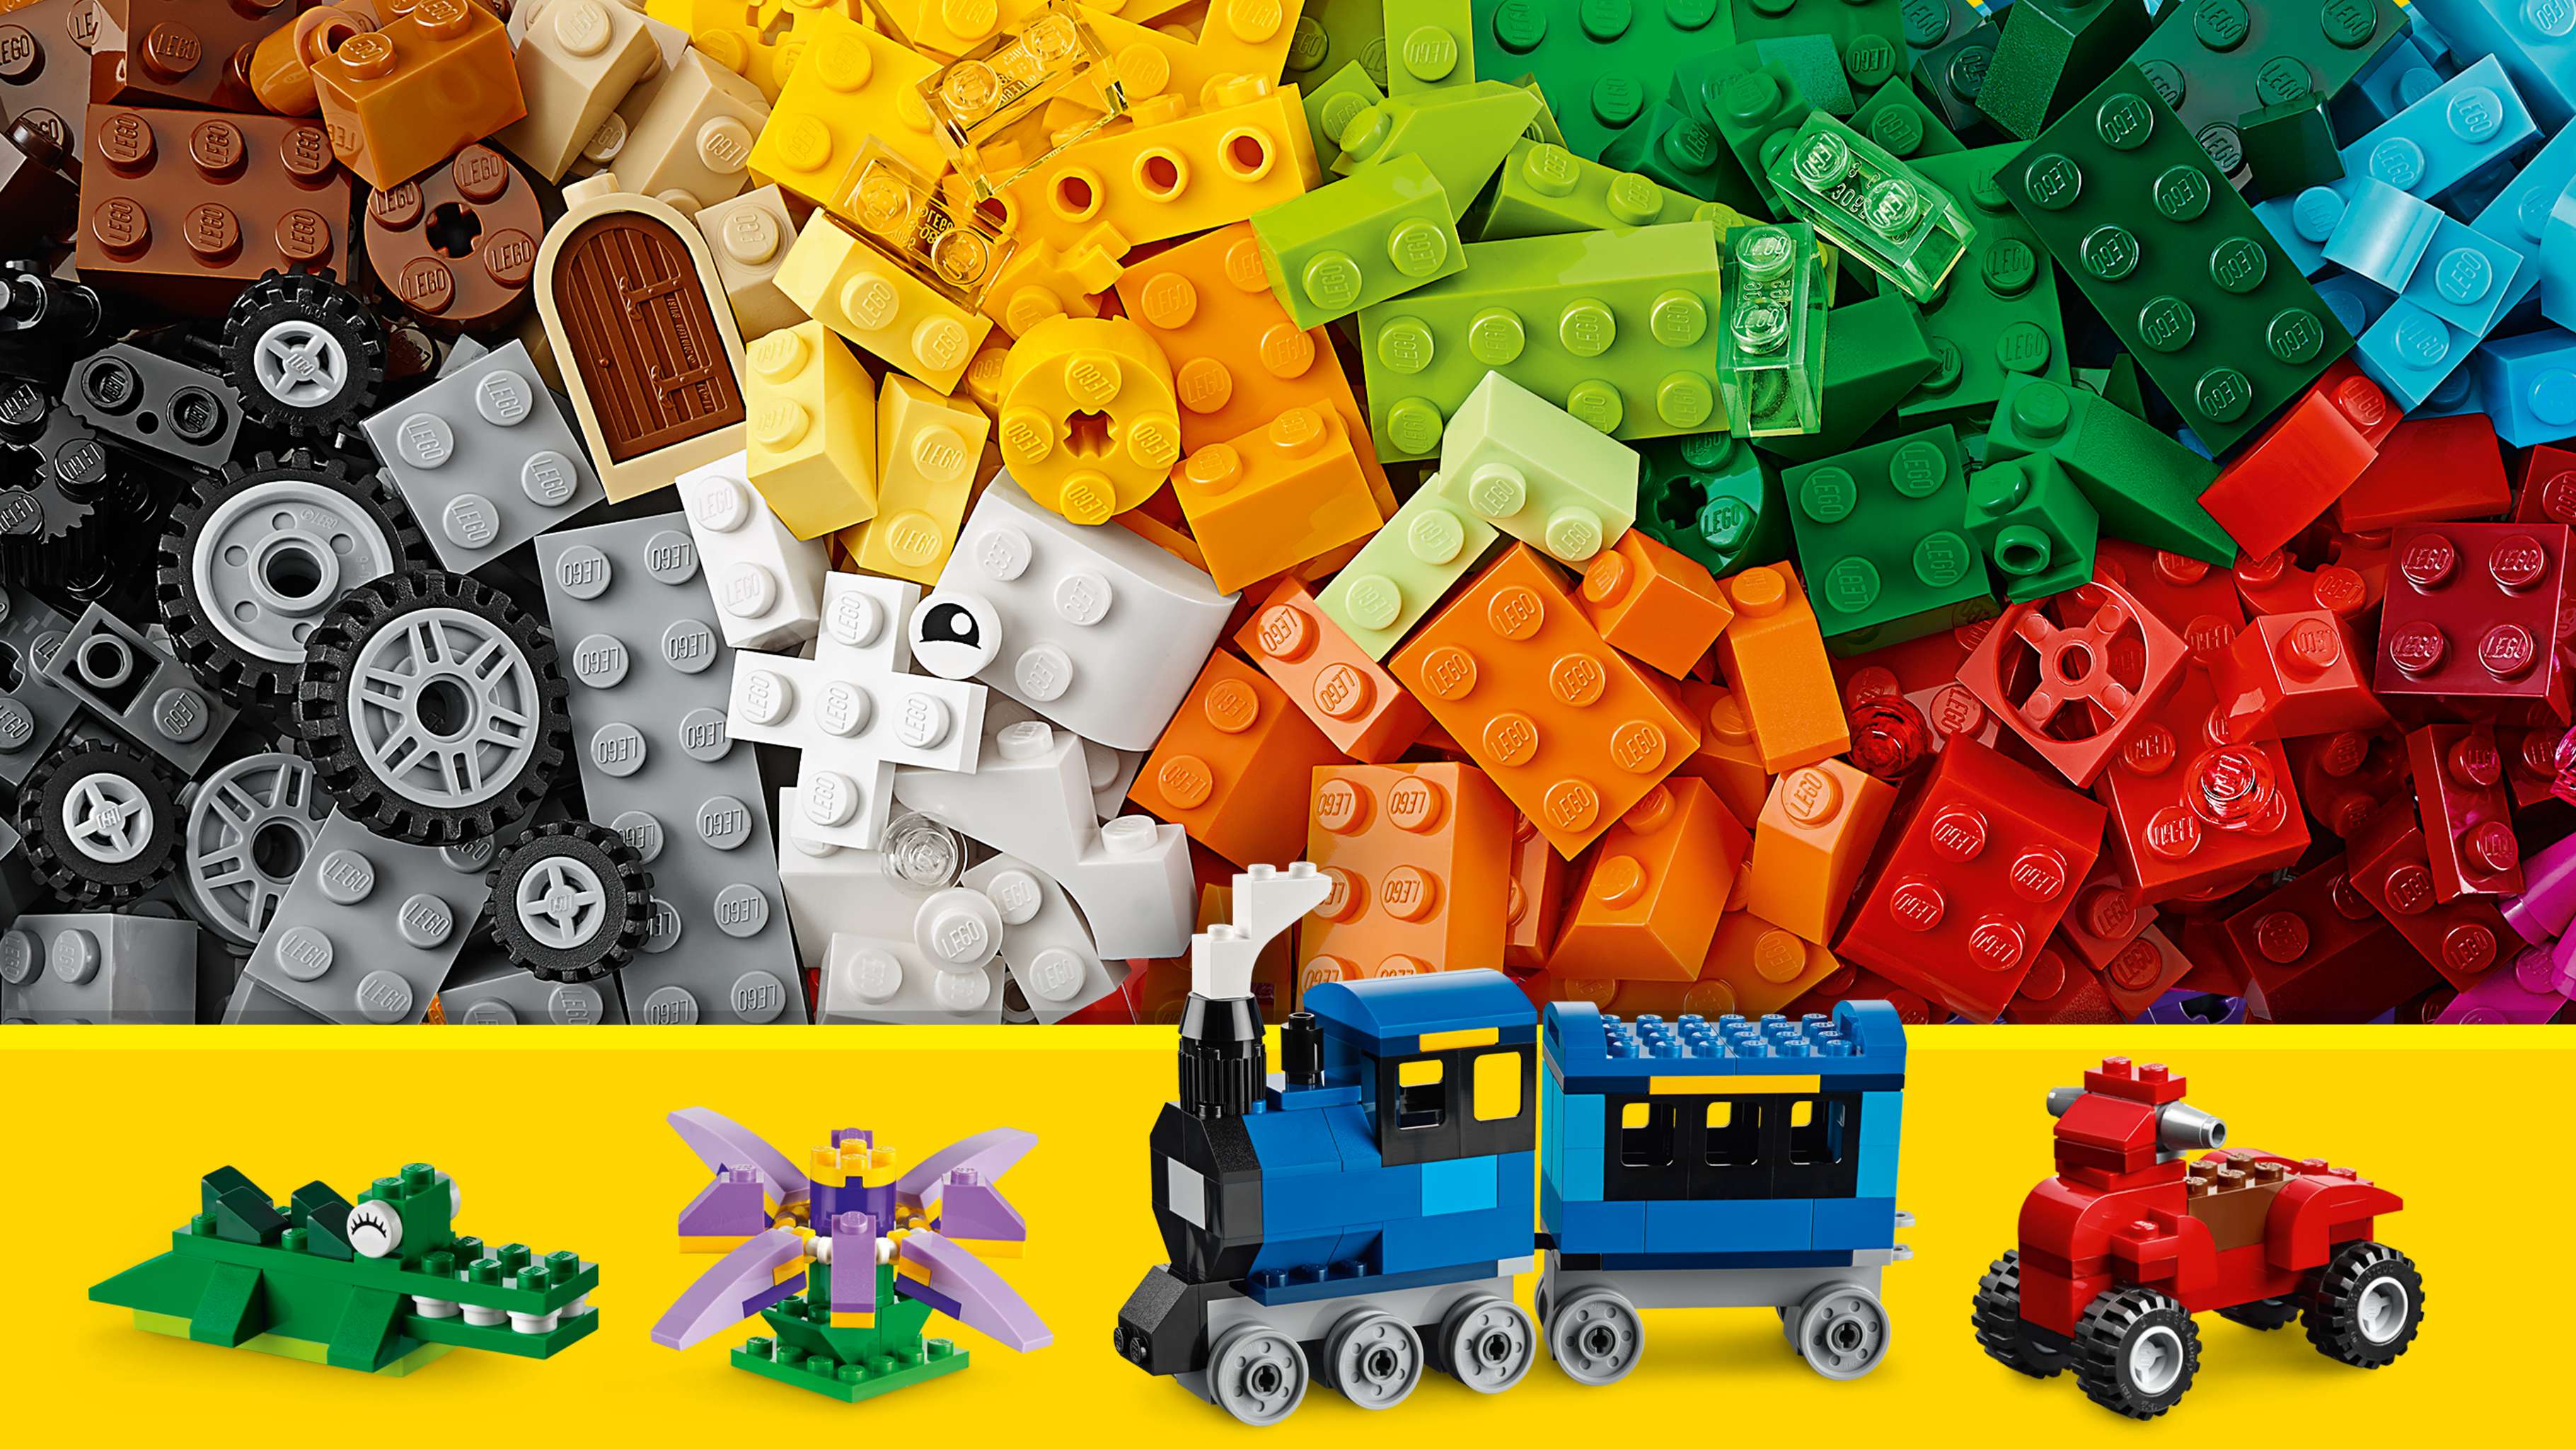 creative brick box lego